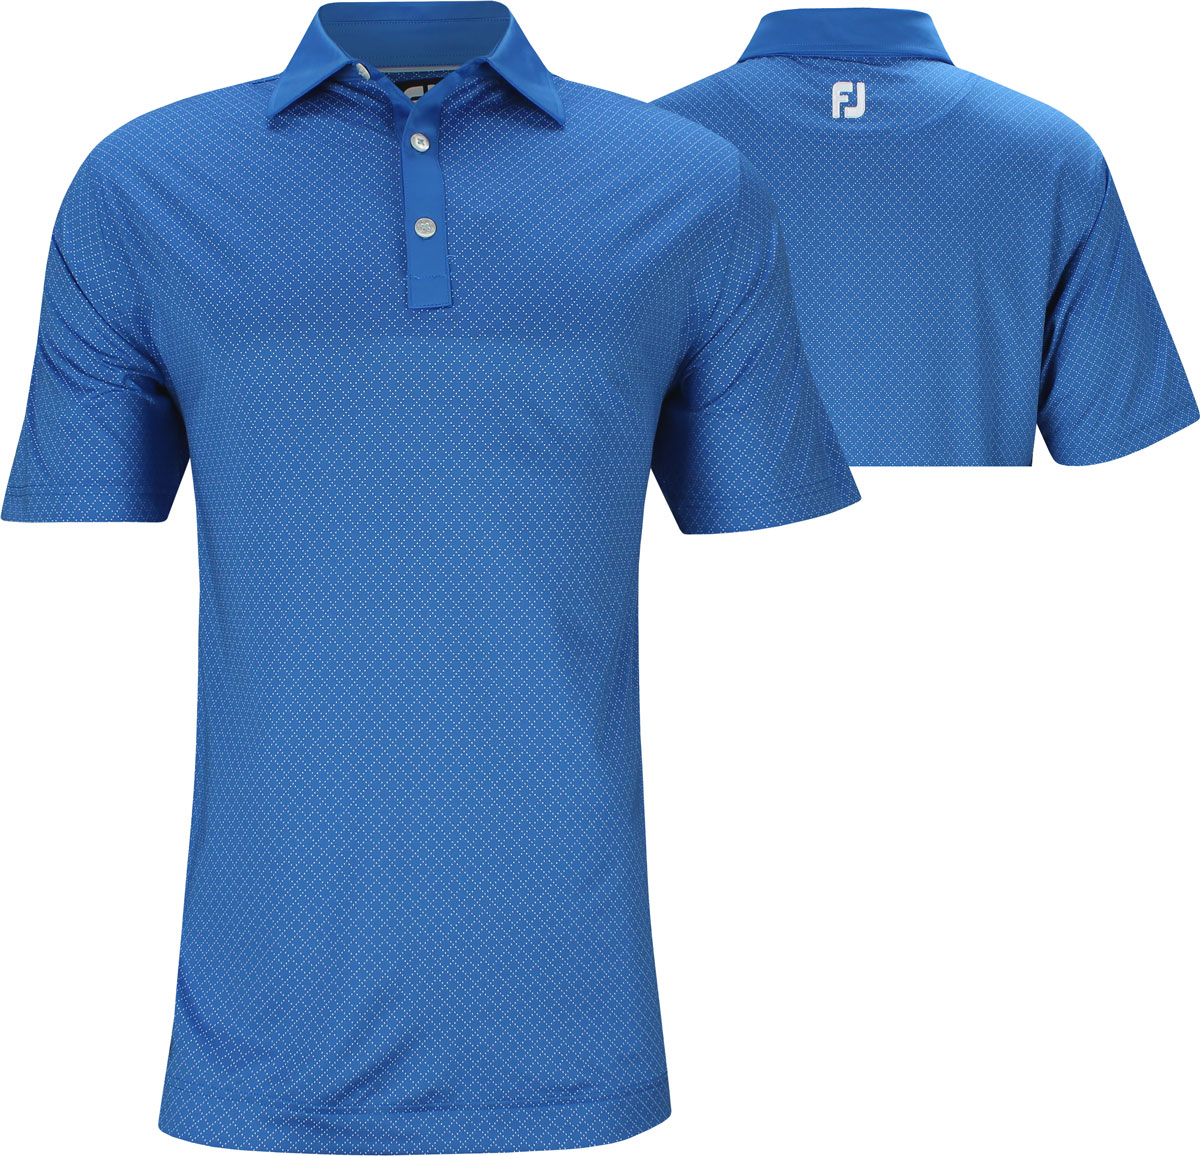 FootJoy ProDry Lisle Diamond Dot Print Golf Shirts